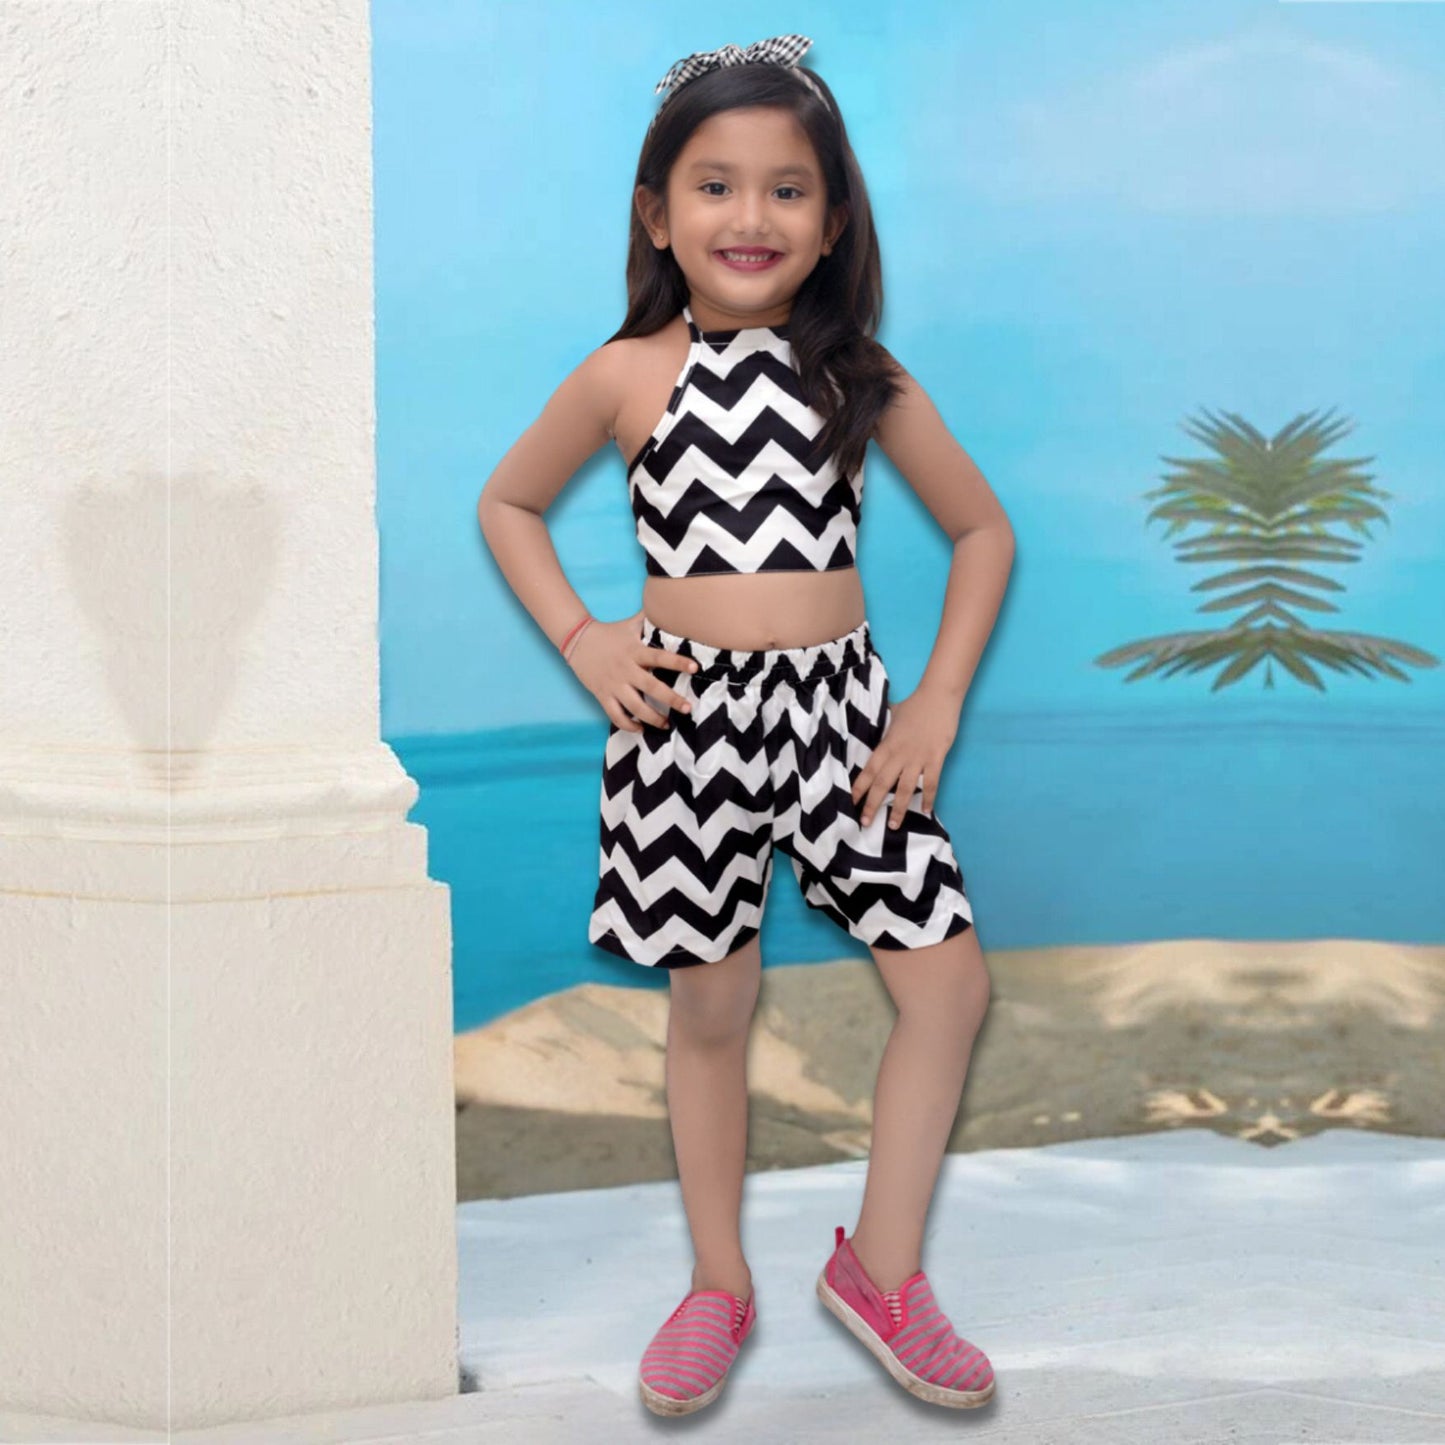 Stylish Designer Black & White Top & Shorts For Baby Girl.